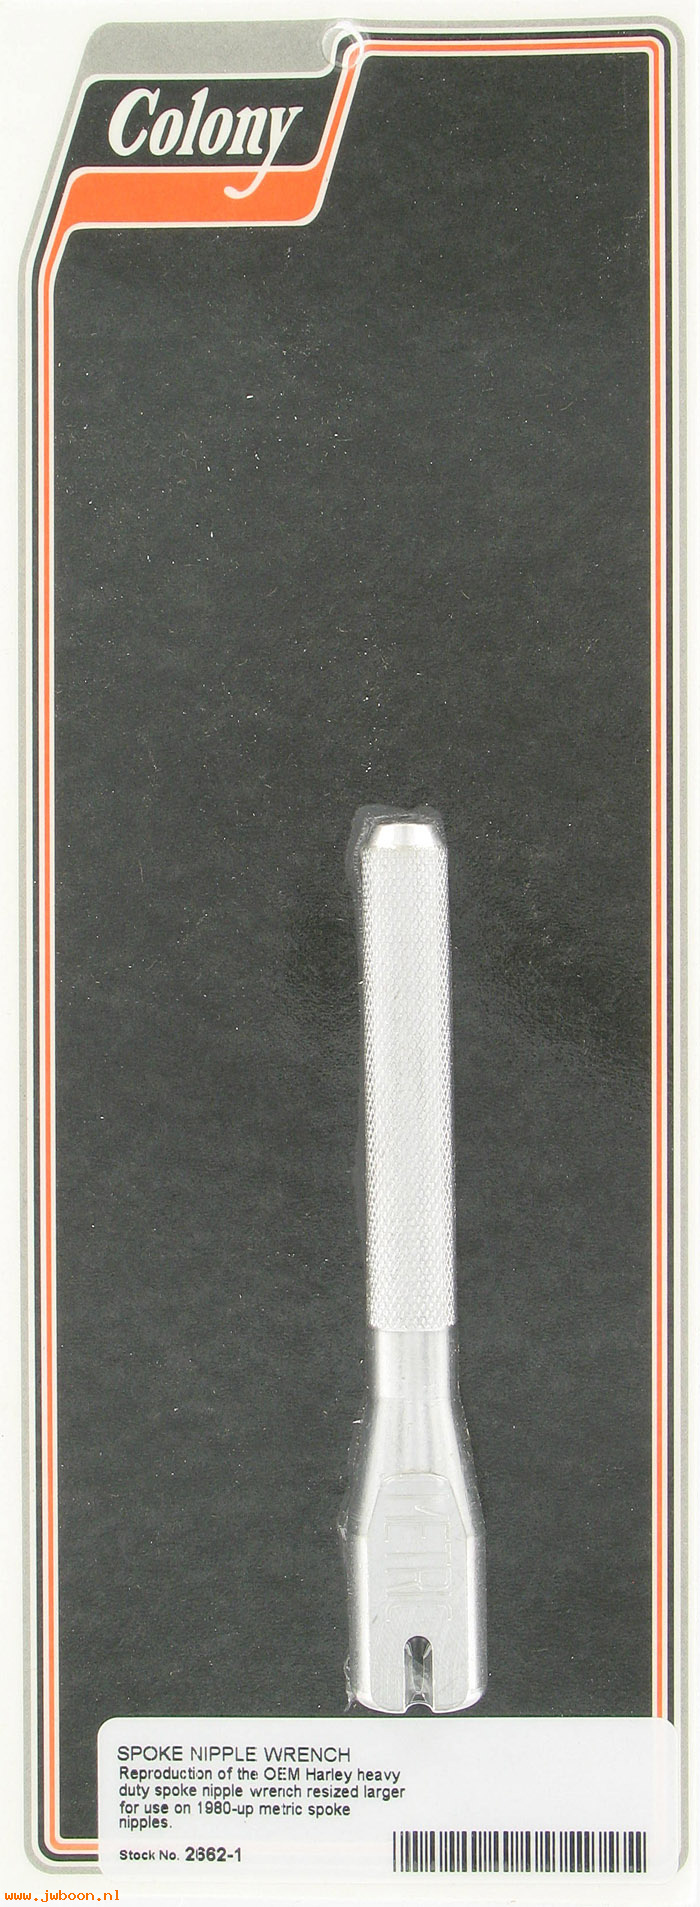 C 2662-1 (): Spoke nipple wrench, in stock, Colony - metric nipples '80-